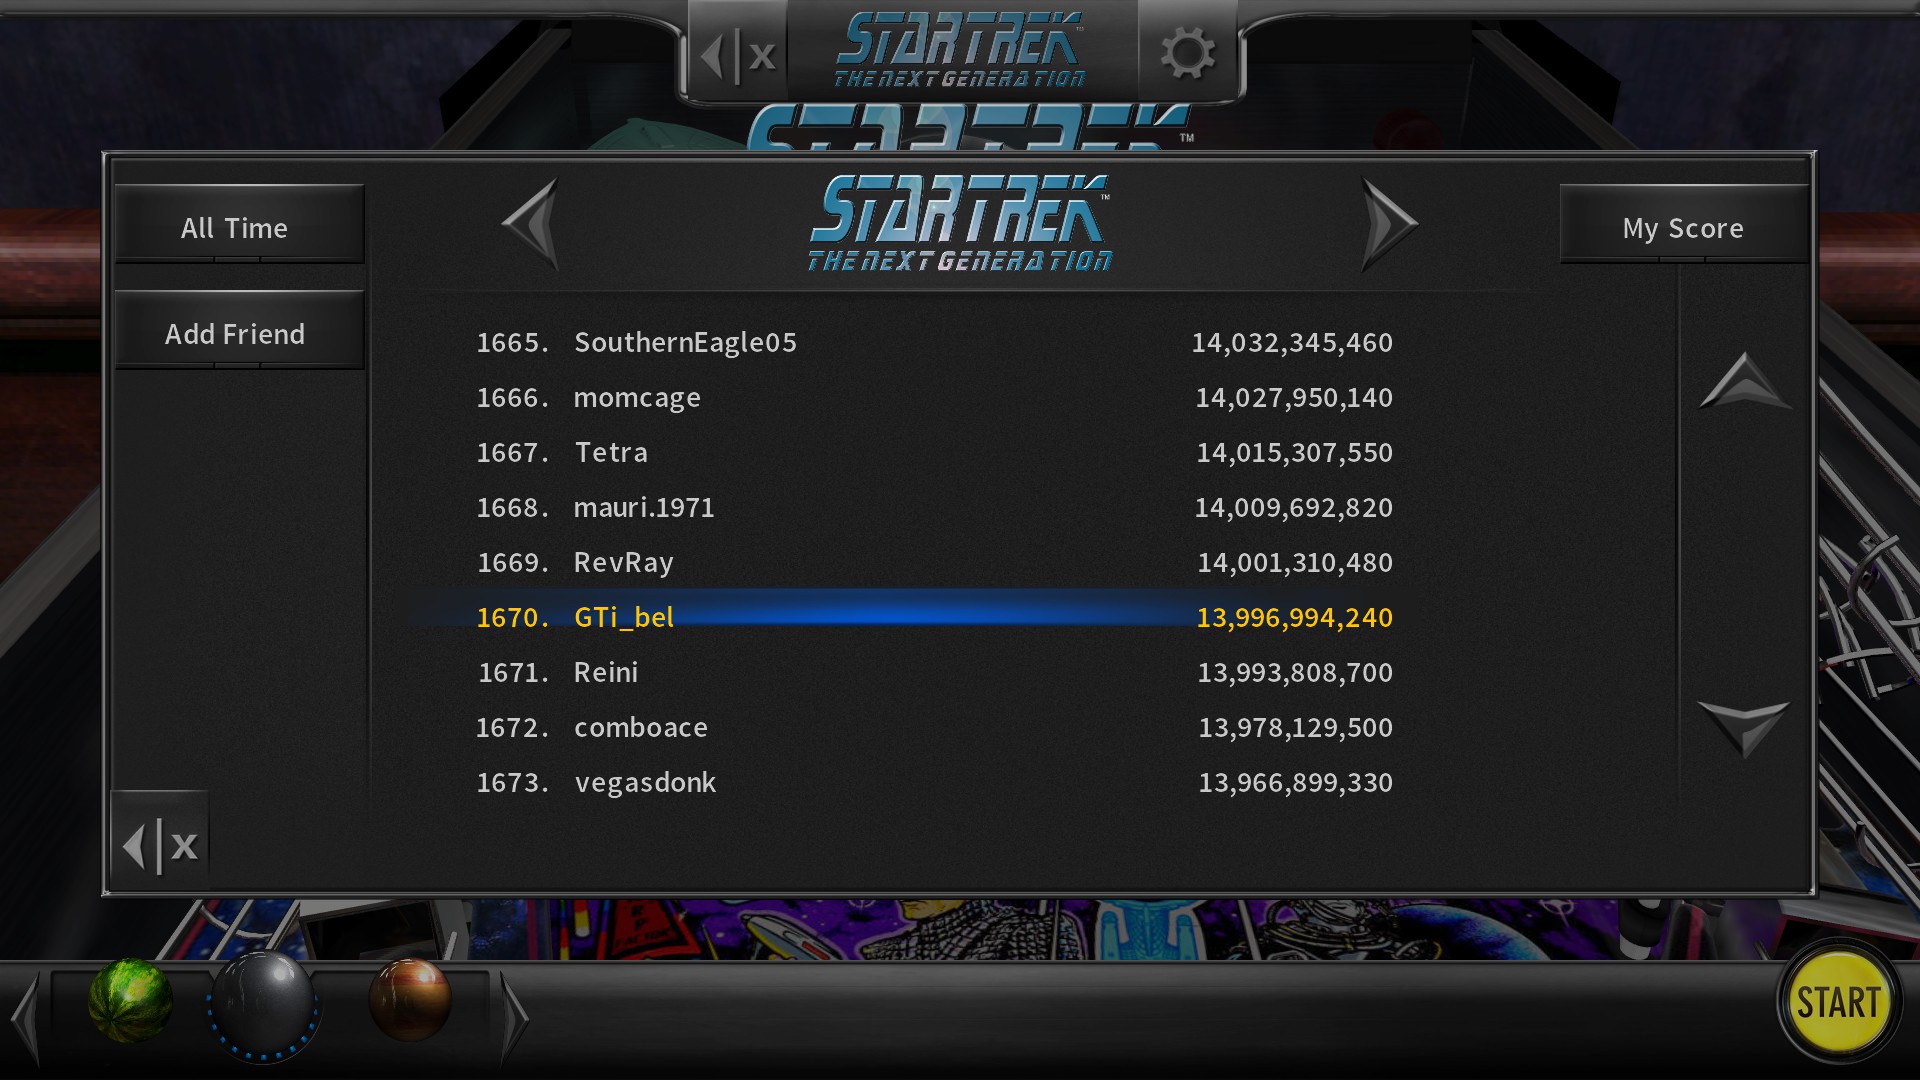 GTibel: Pinball Arcade: Star Trek: The Next Generation (PC) 13,996,994,240 points on 2020-07-22 09:07:47